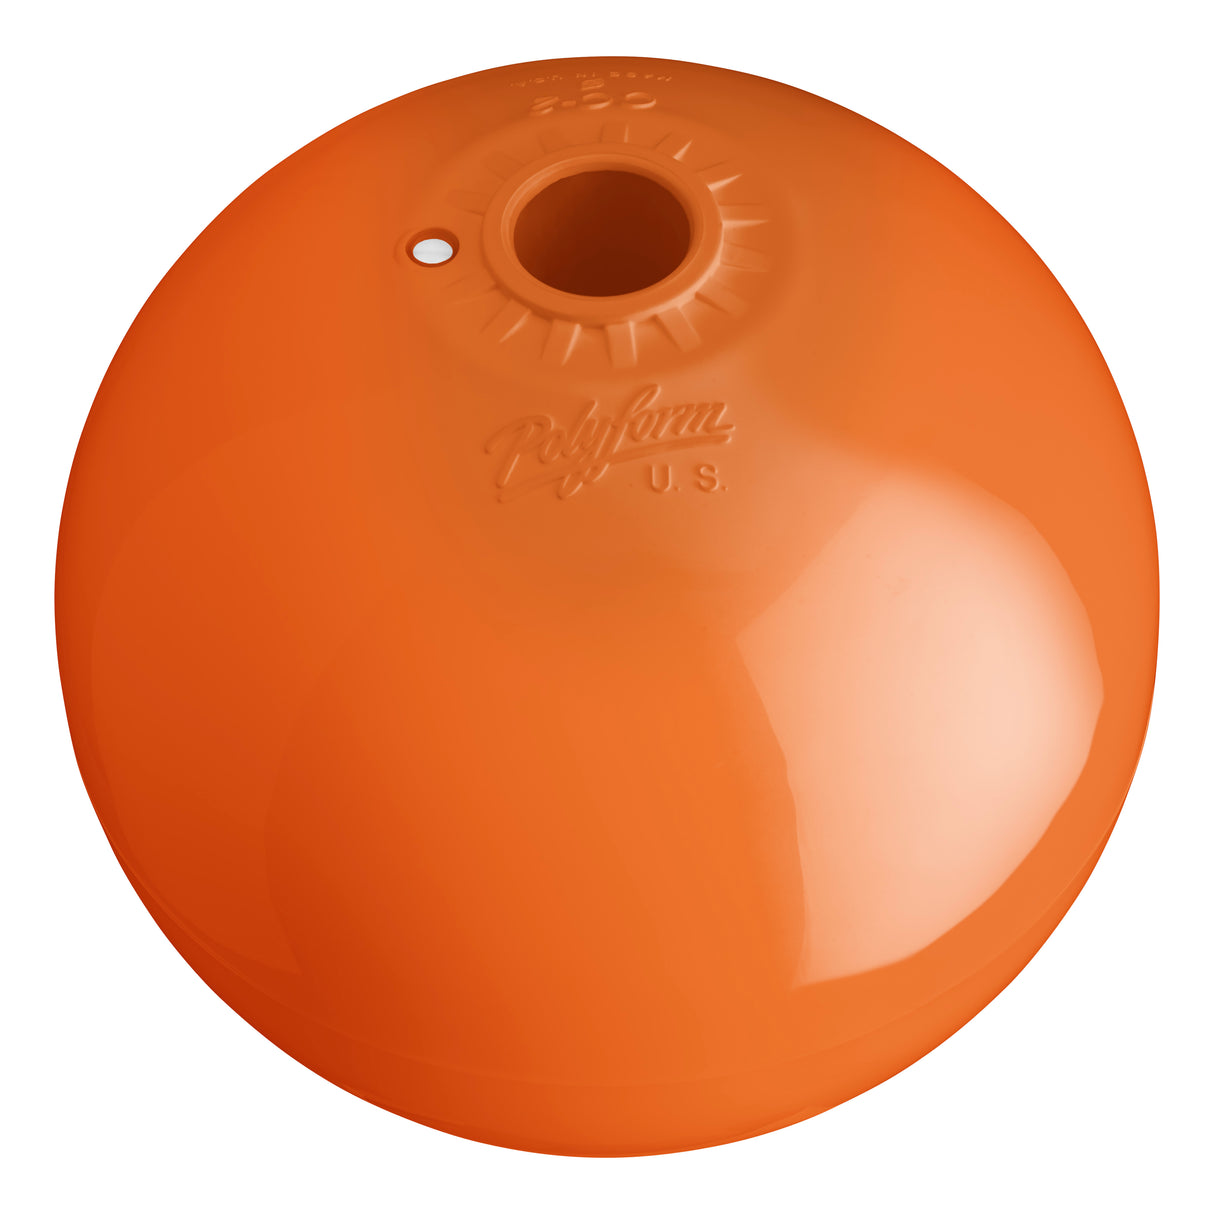 Hole through center mooring and marker buoy, Polyform CC-4 International Orange angled shot